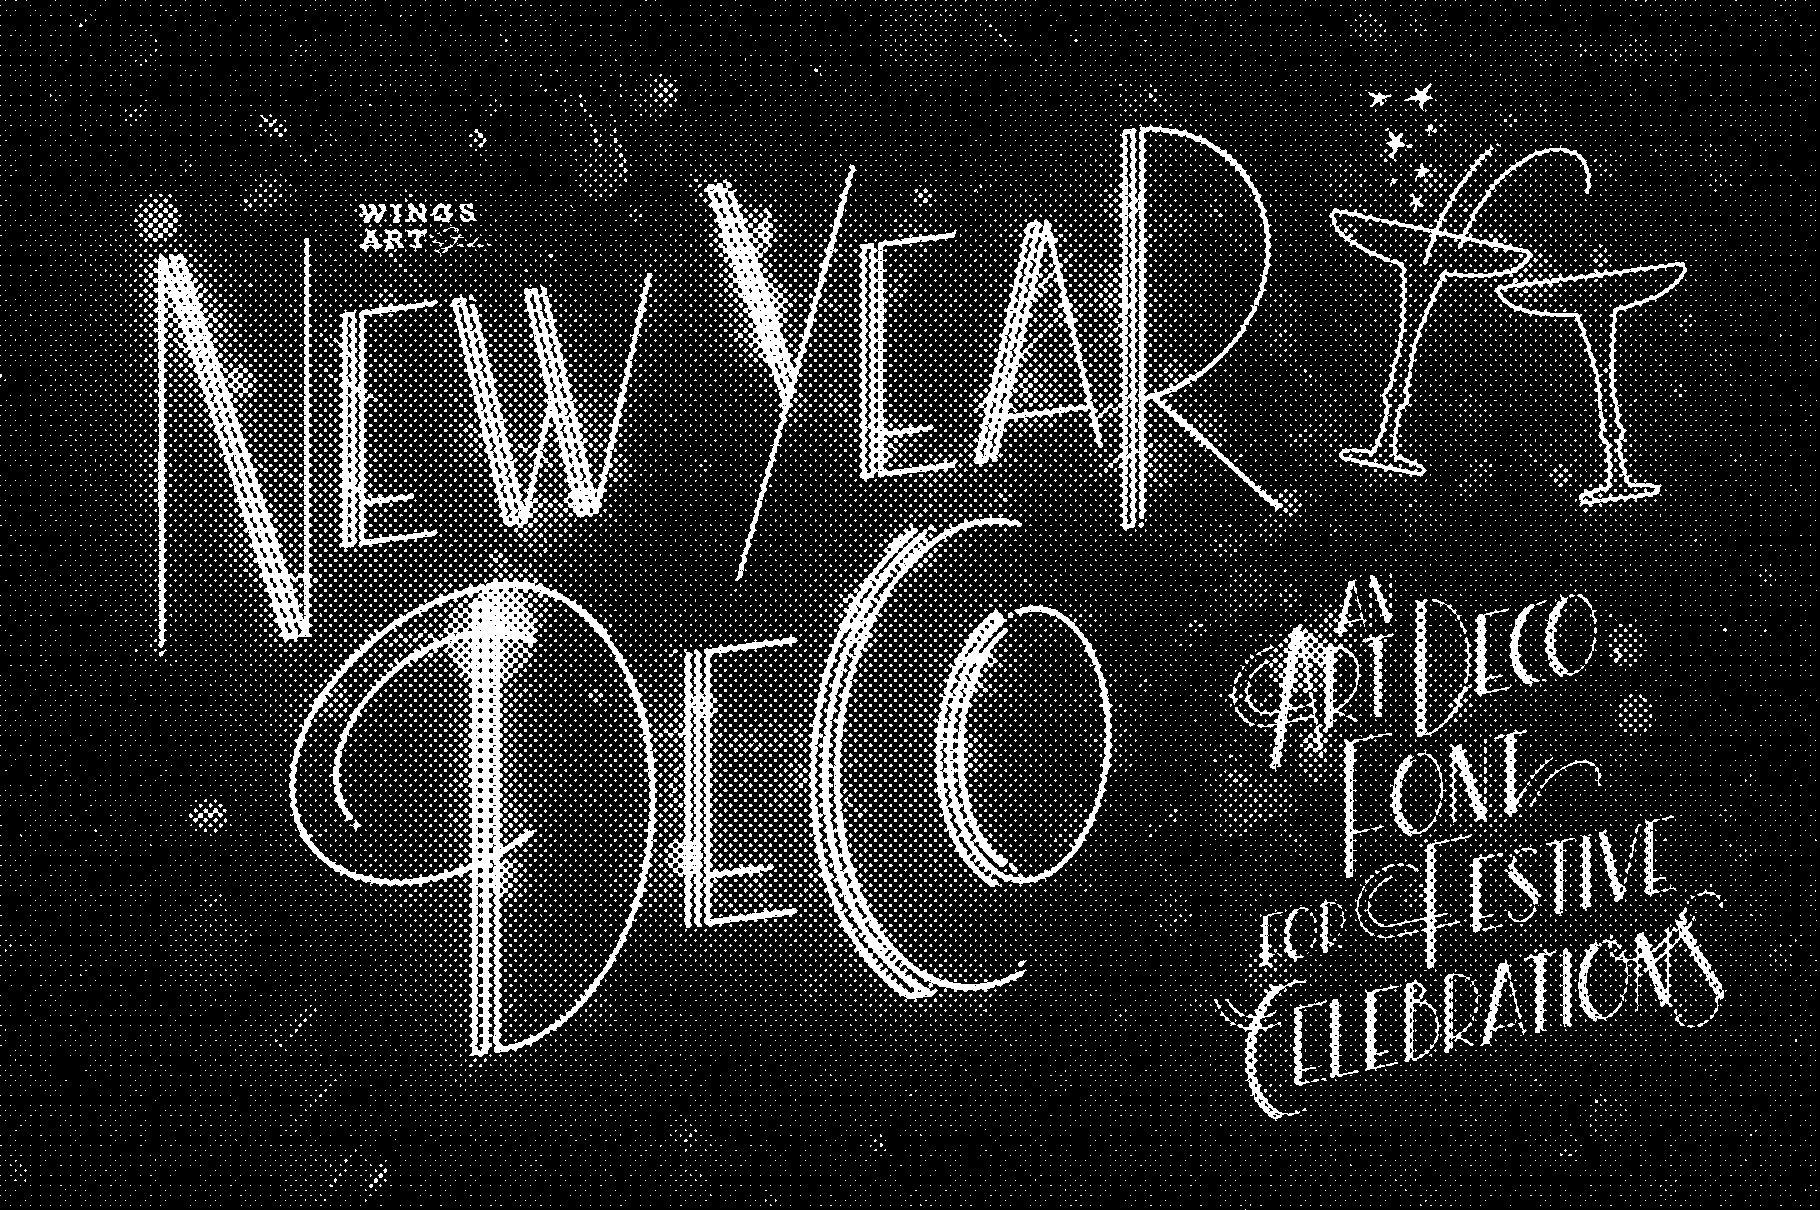 New Year Deco Font by Wingsart Studio